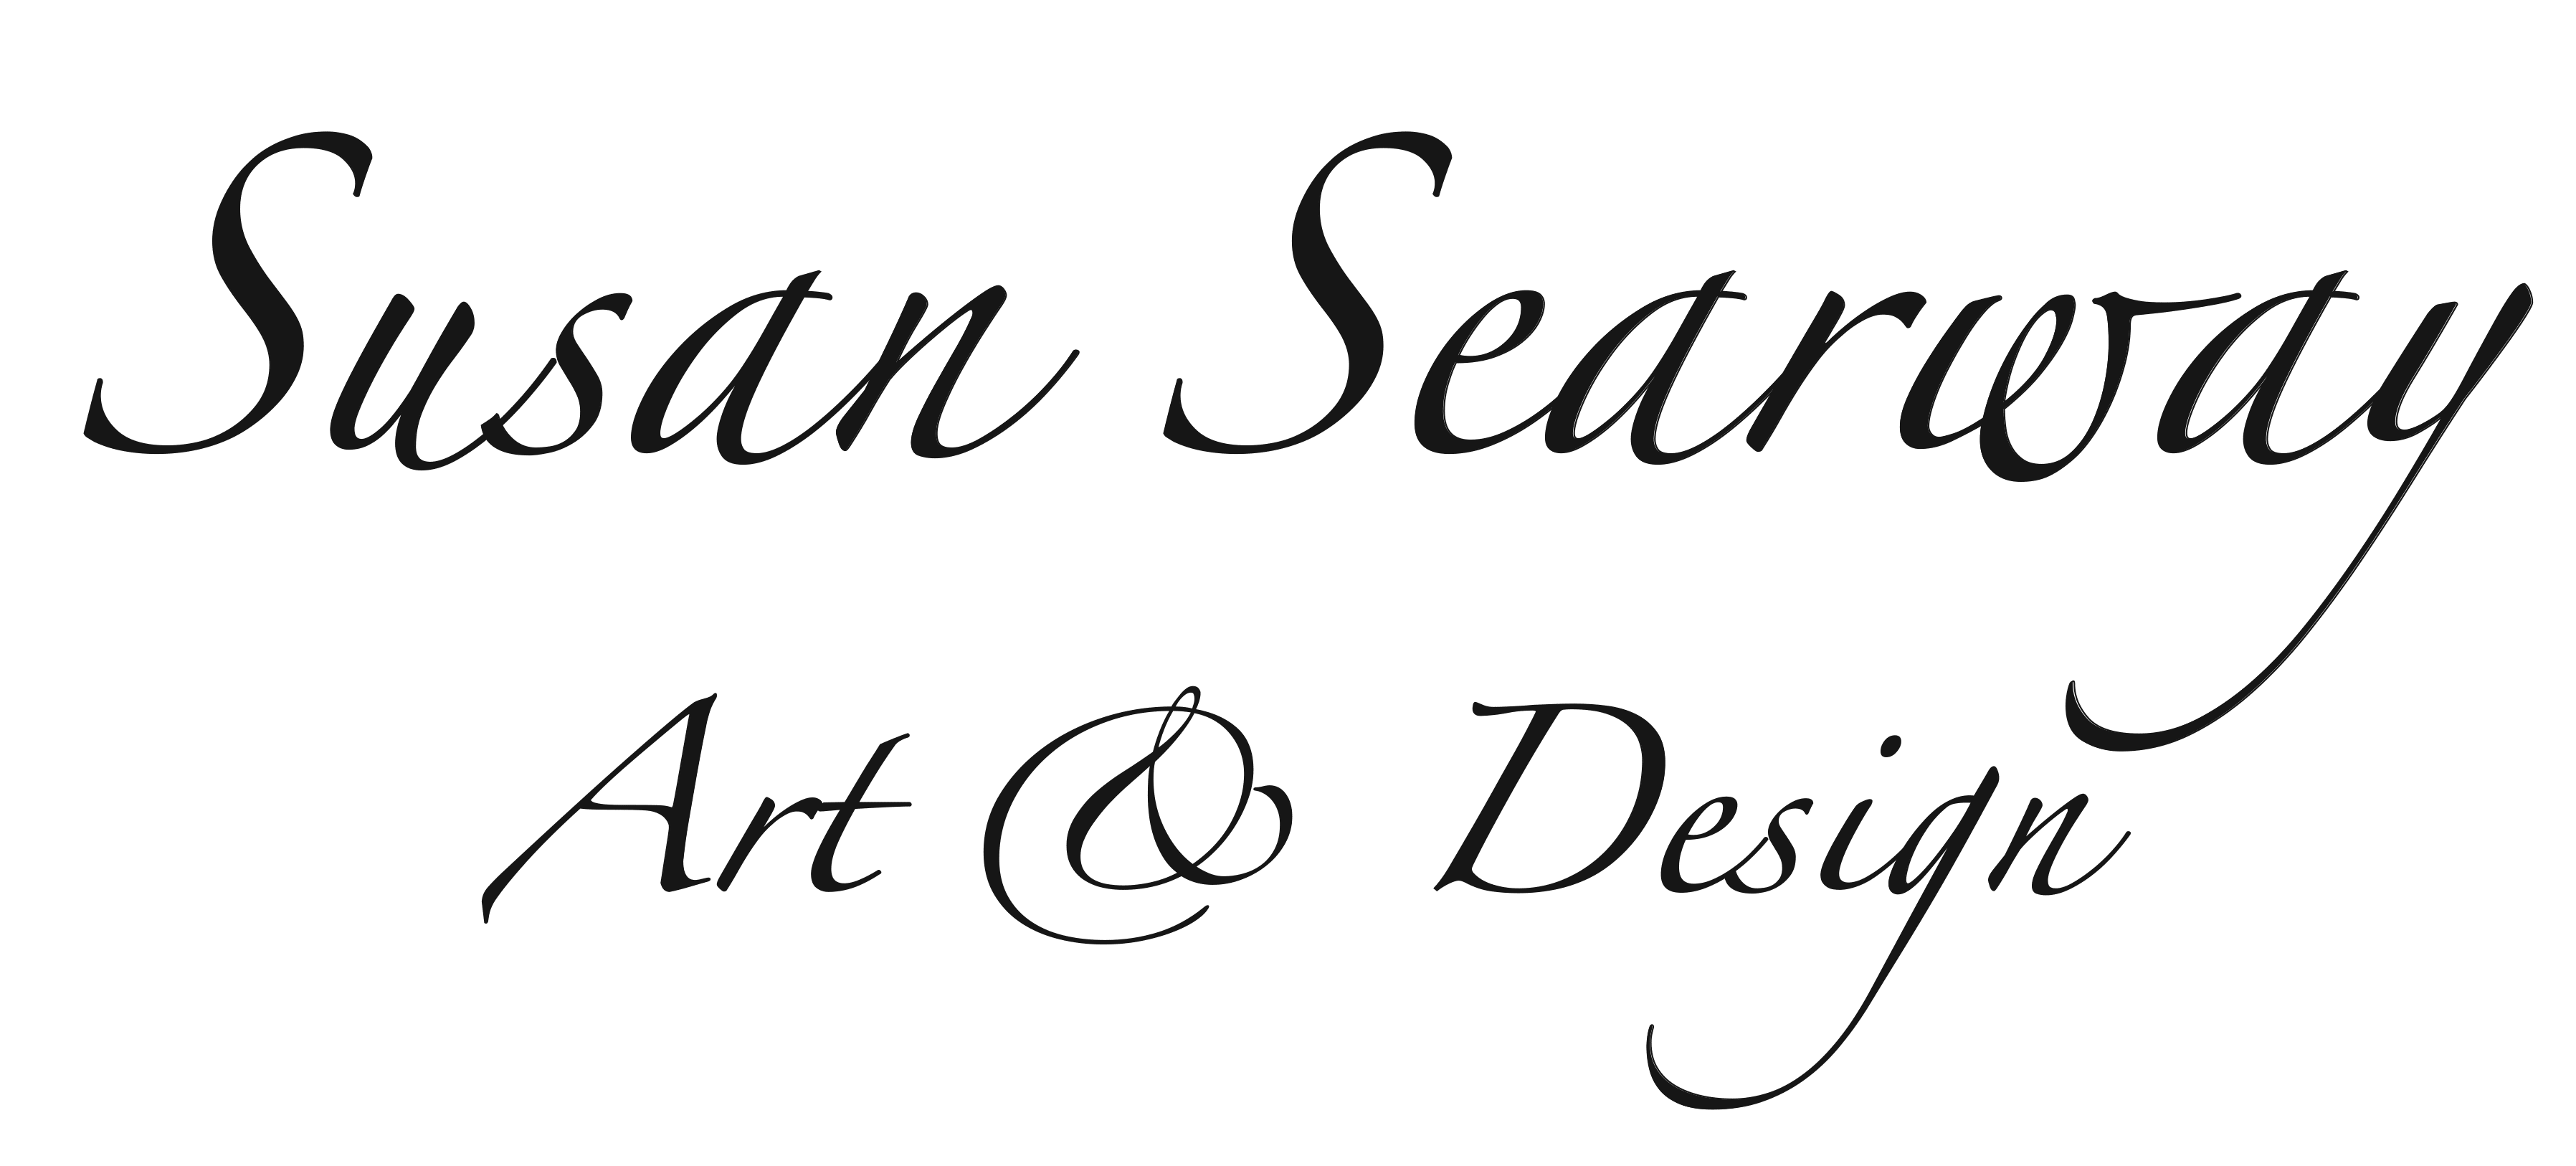 About The Artist Susan Searway Fertig Of Susan Searway Art Design